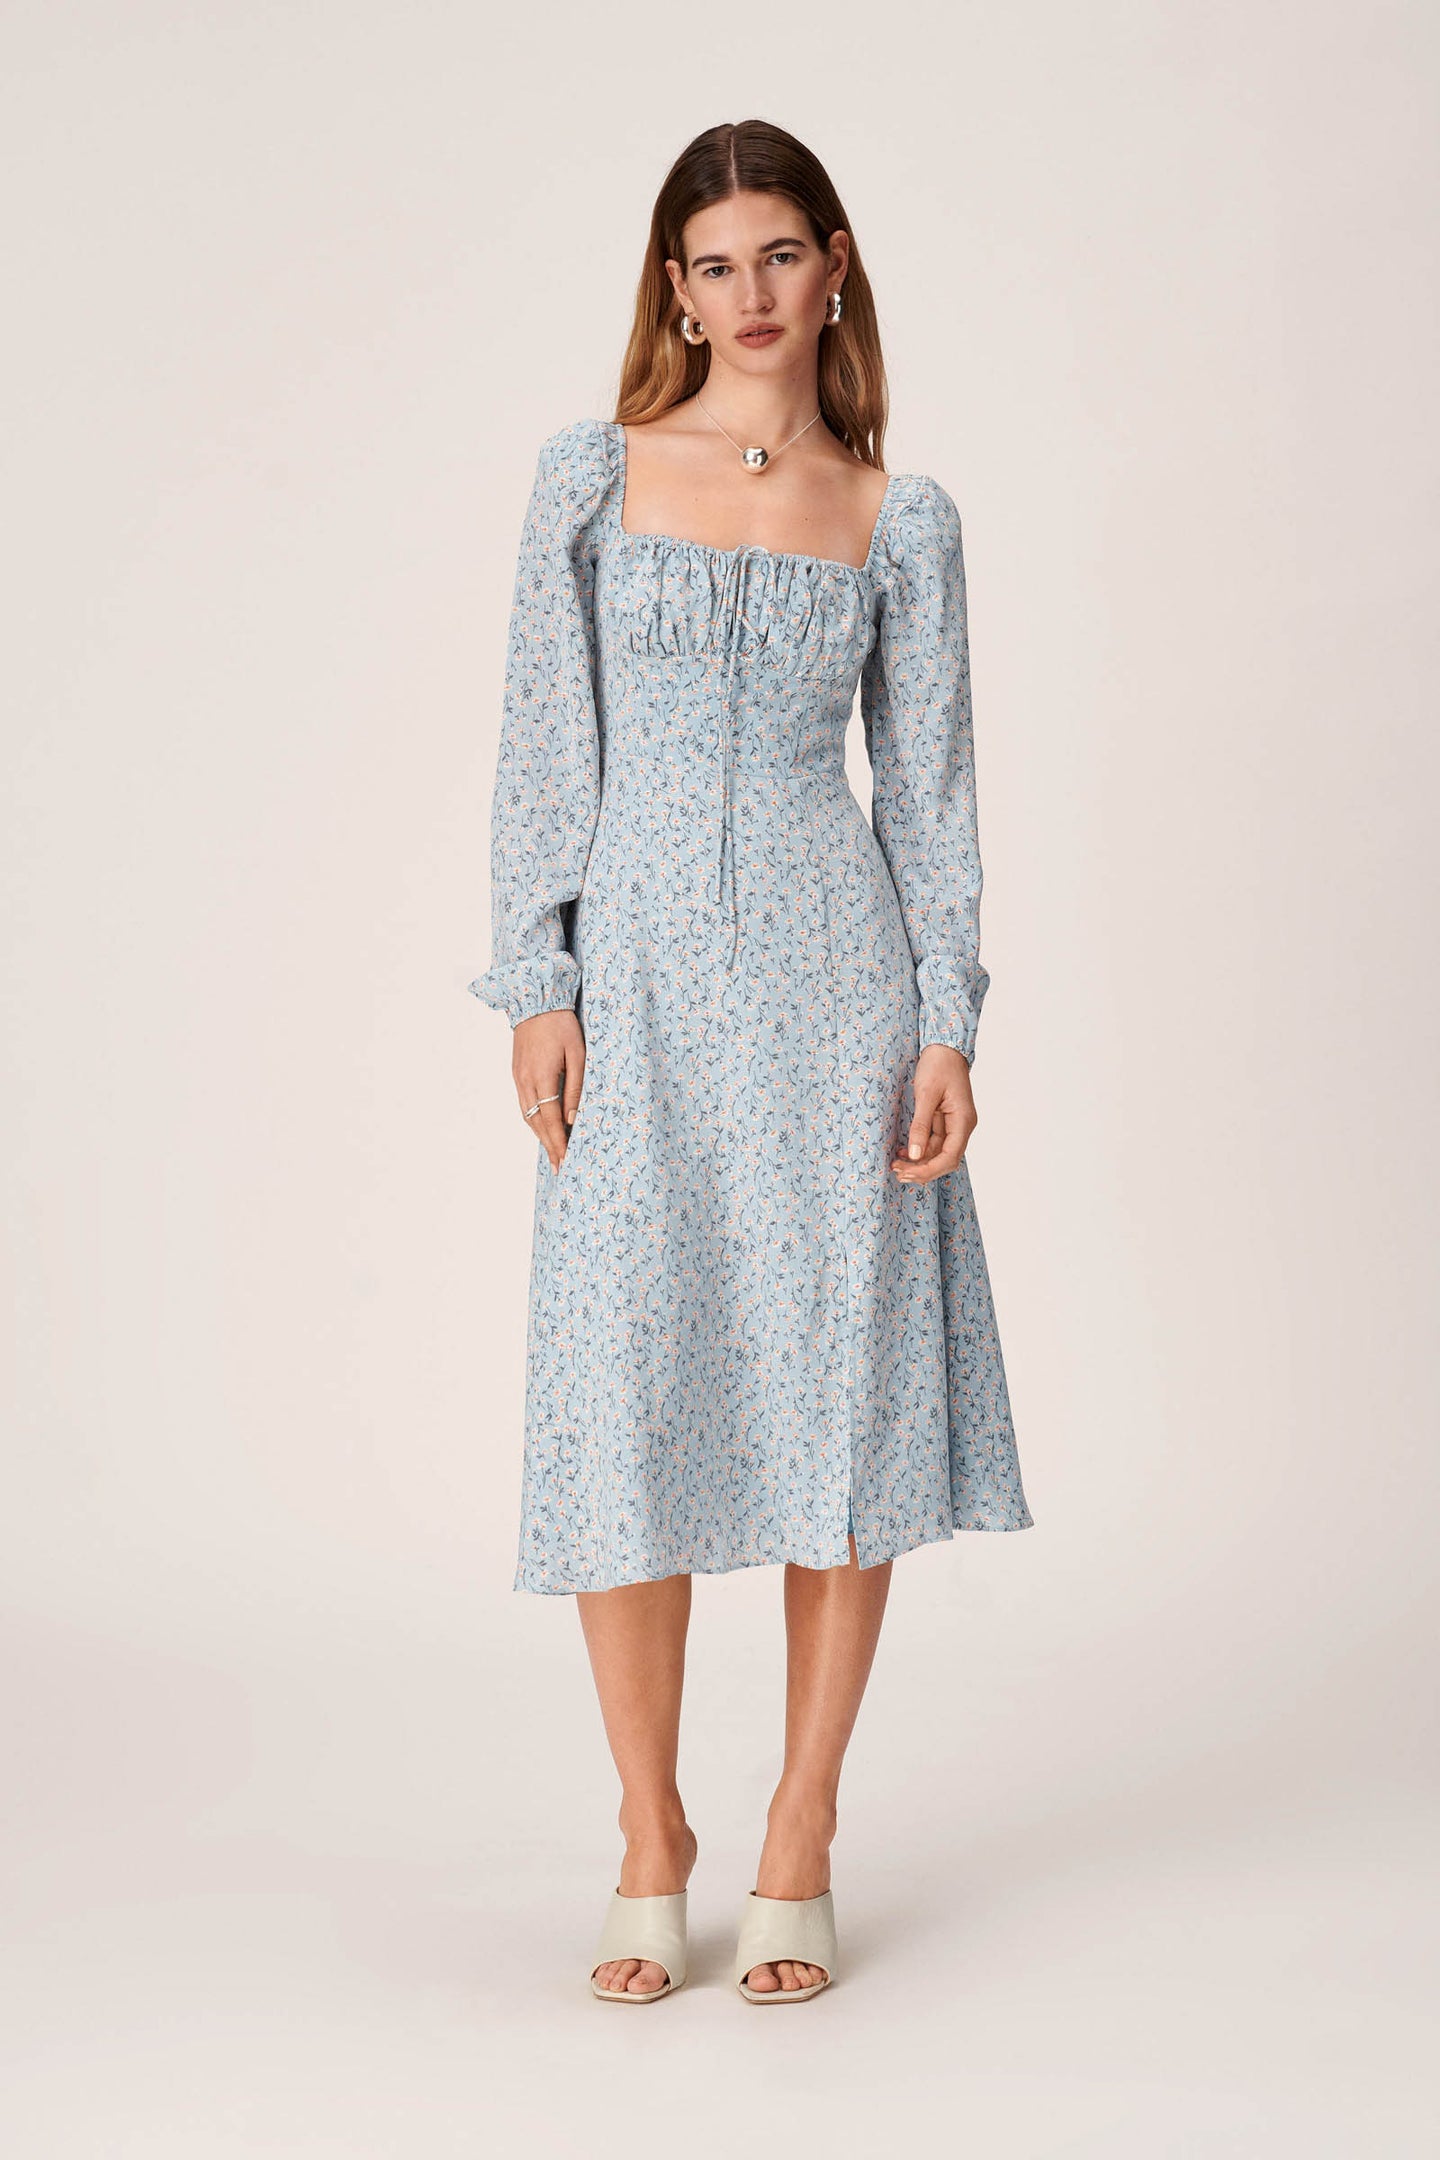 Midi dress in blue floral – Shop dress – adoore.se